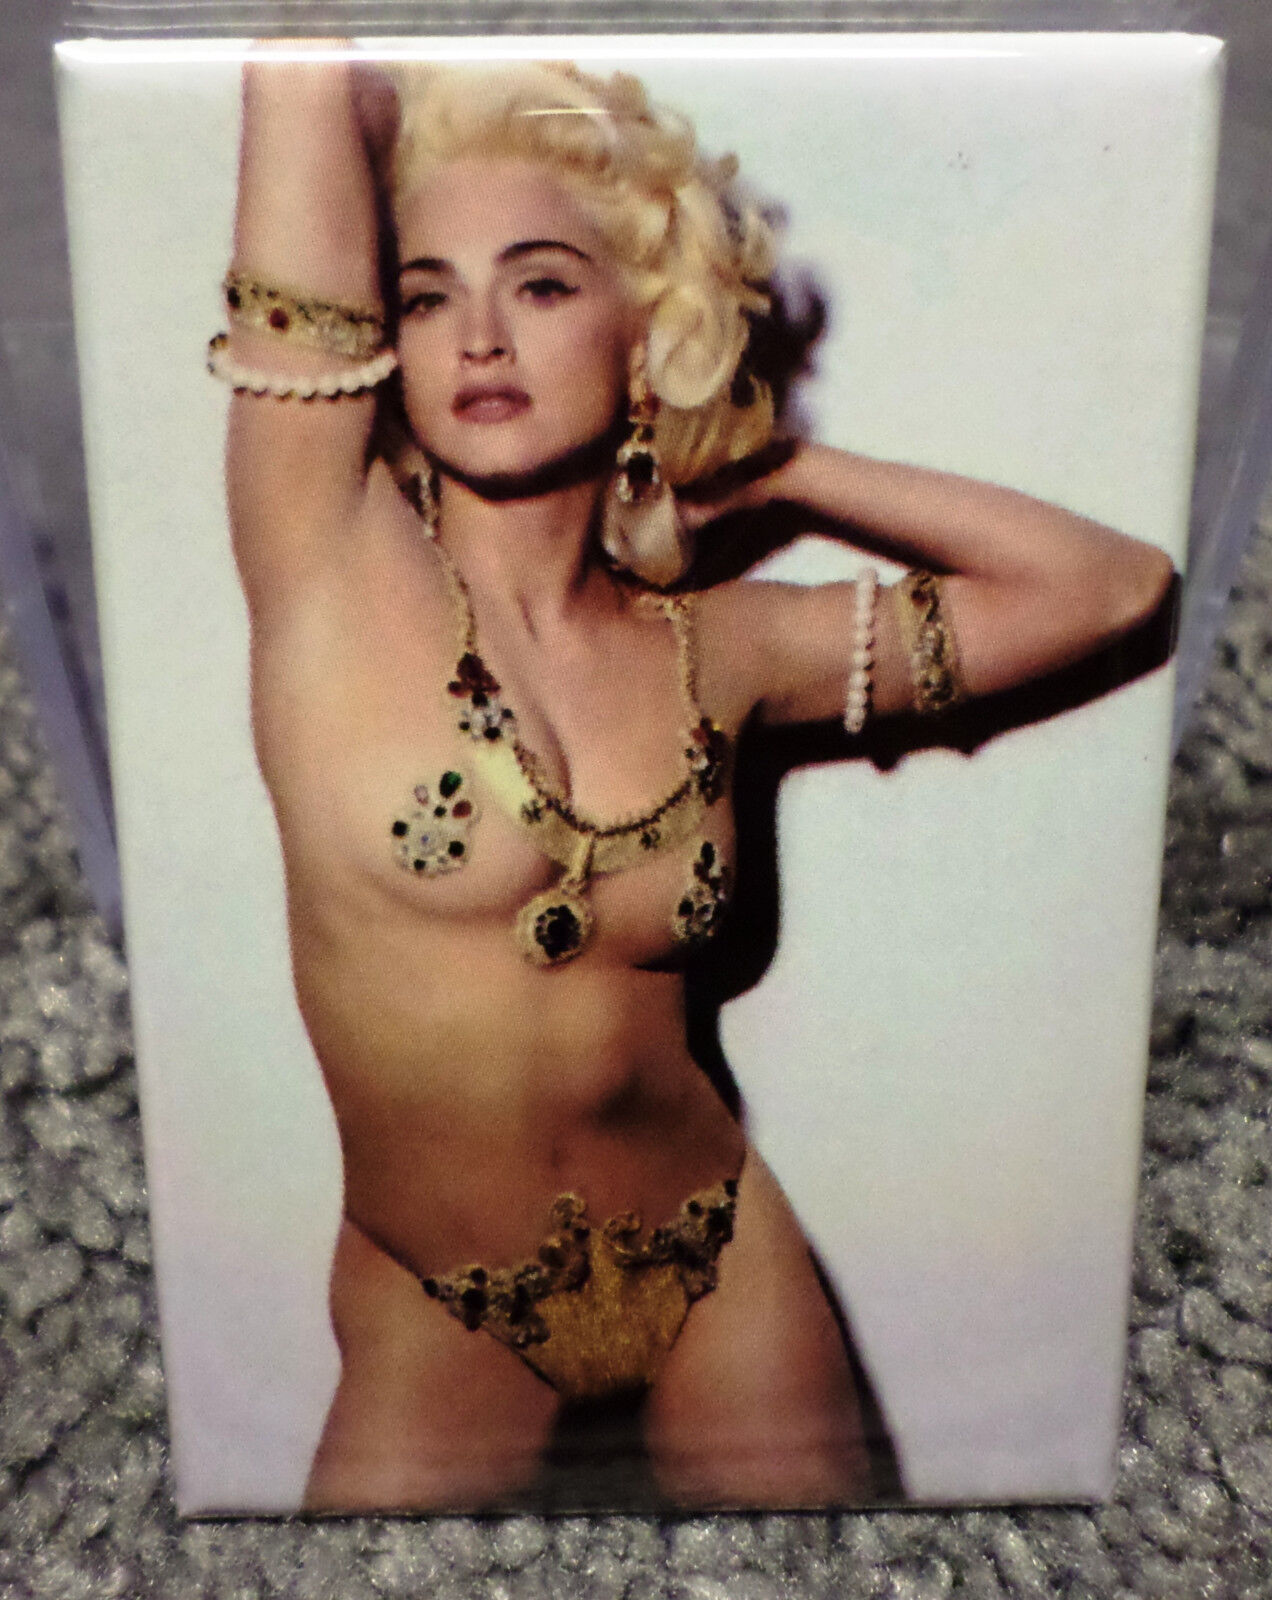 Madonna 2